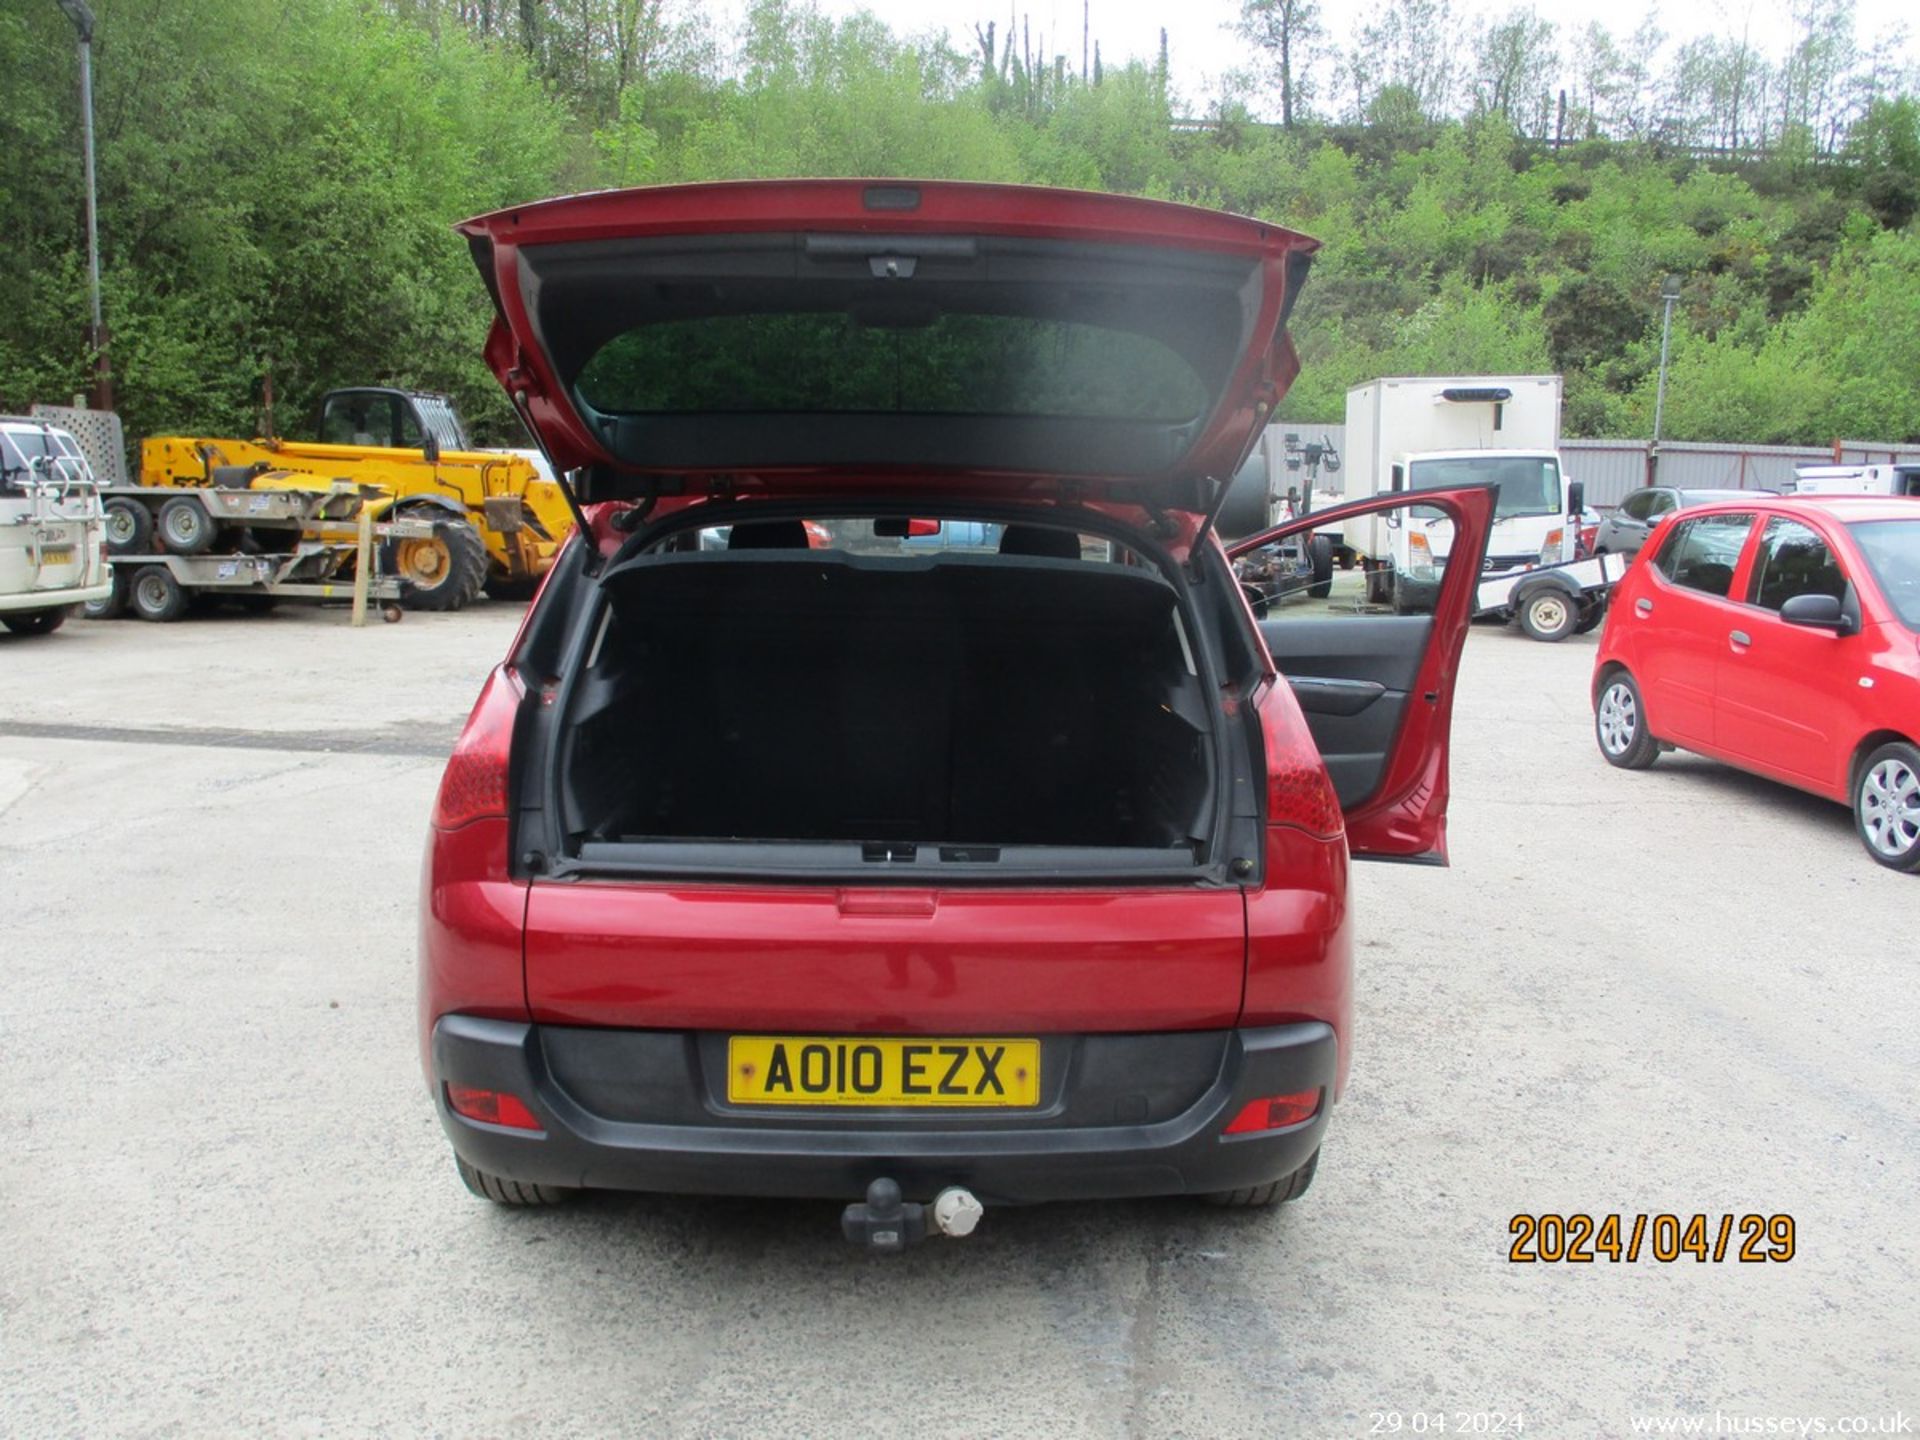 10/10 PEUGEOT 3008 ACTIVE HDI - 1560cc 5dr Hatchback (Red, 132k) - Image 12 of 20